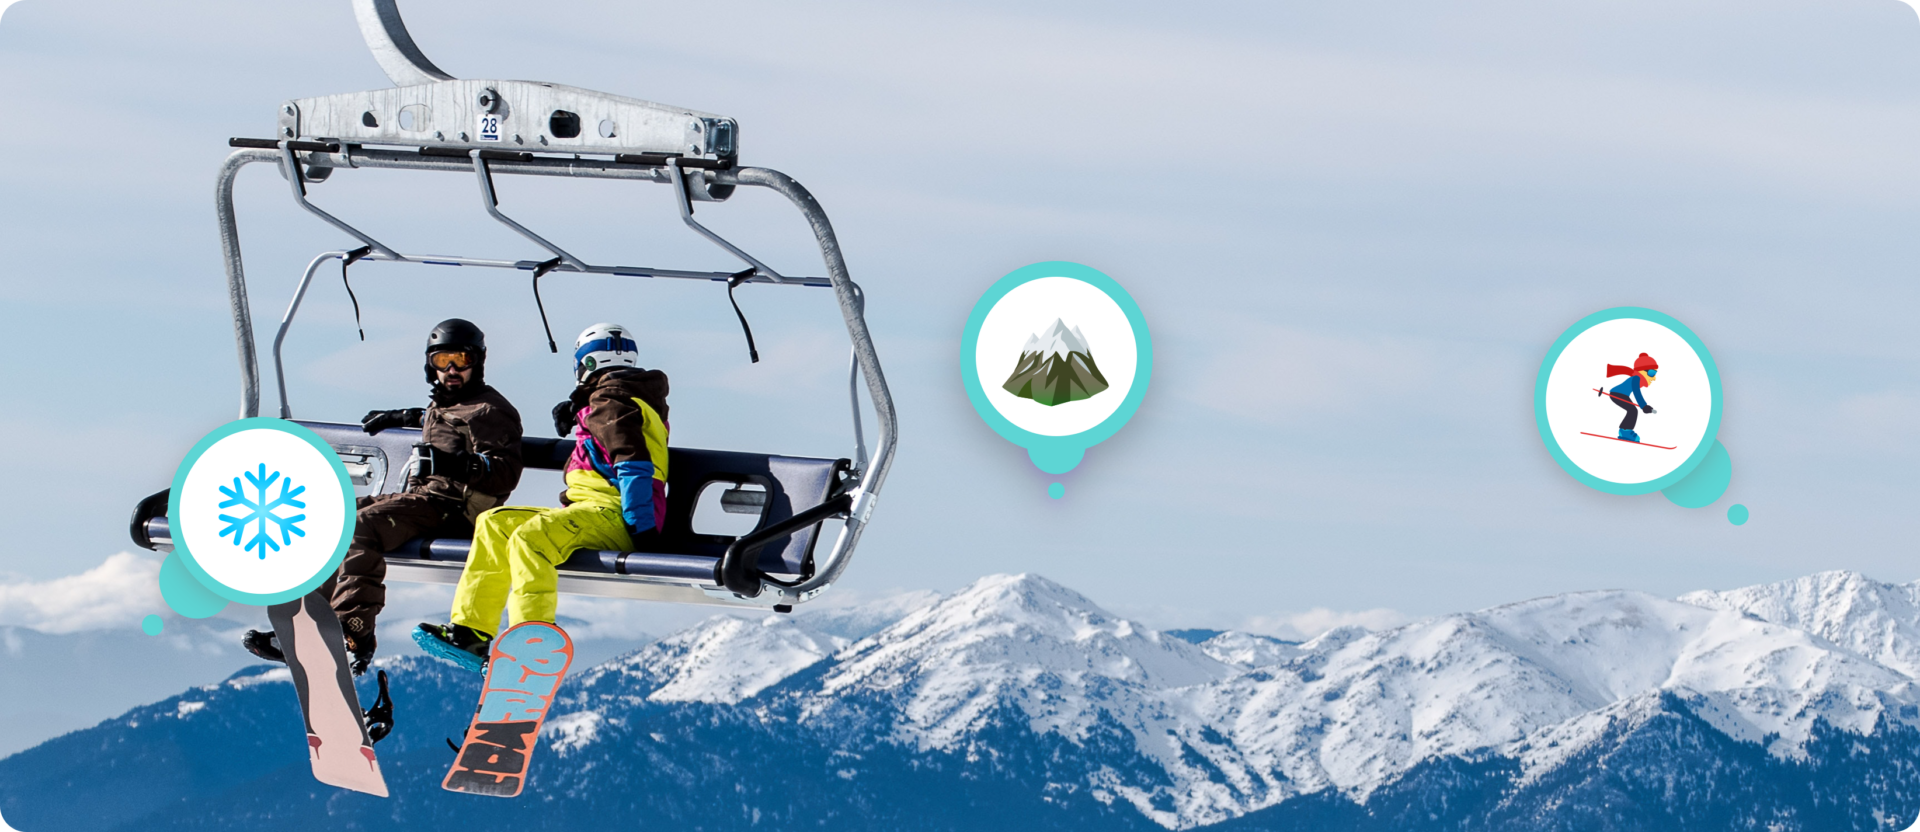 Popular Ski Resorts in Europe